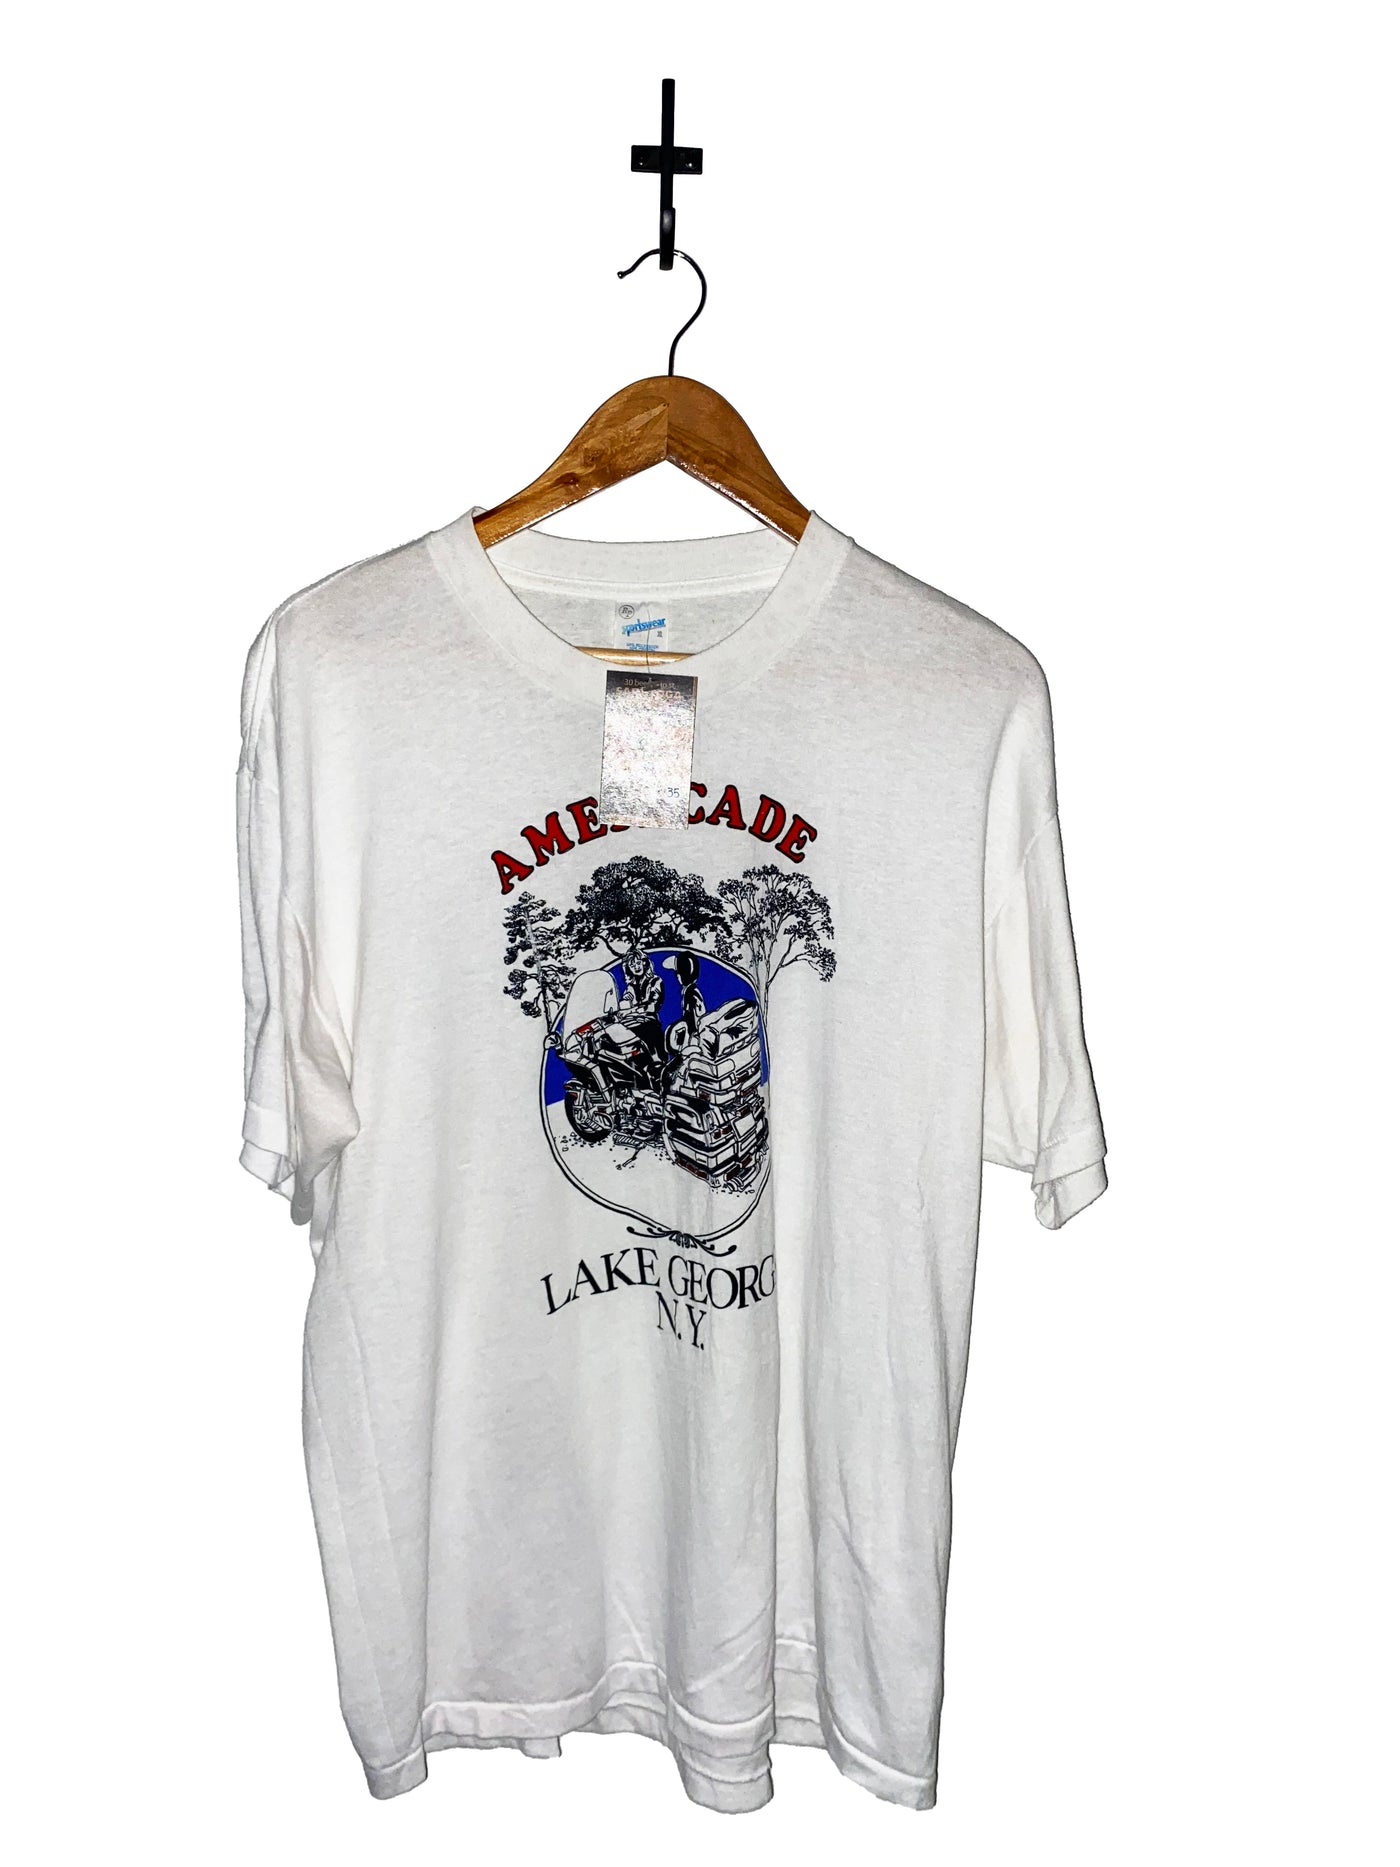 Vintage 80s Lake George Americade T-Shirt